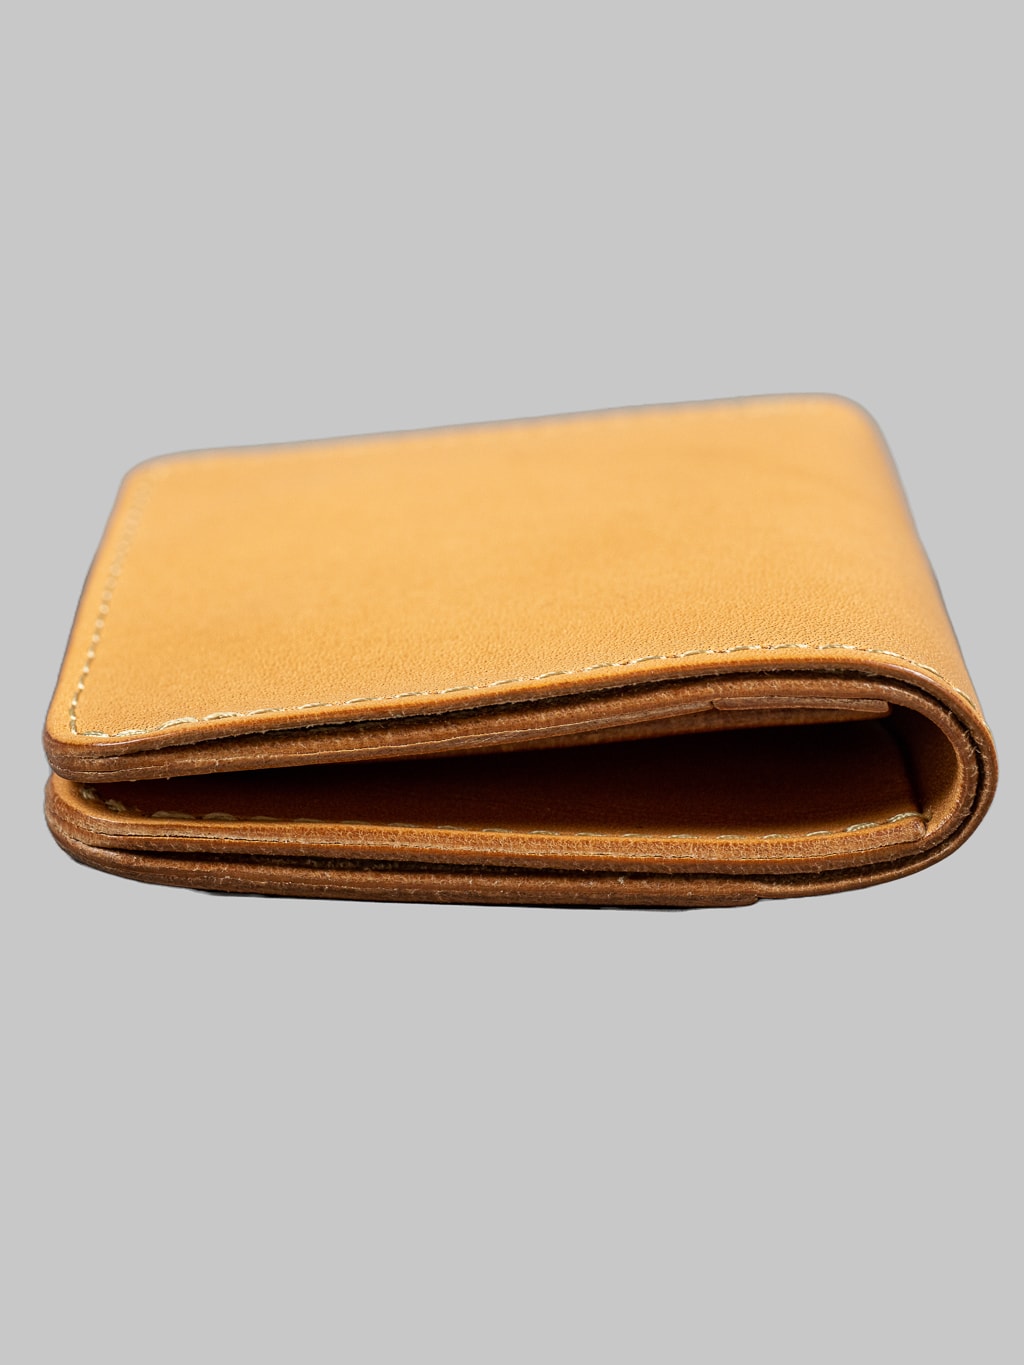 Studio Dartisan natural leather mini wallet side view